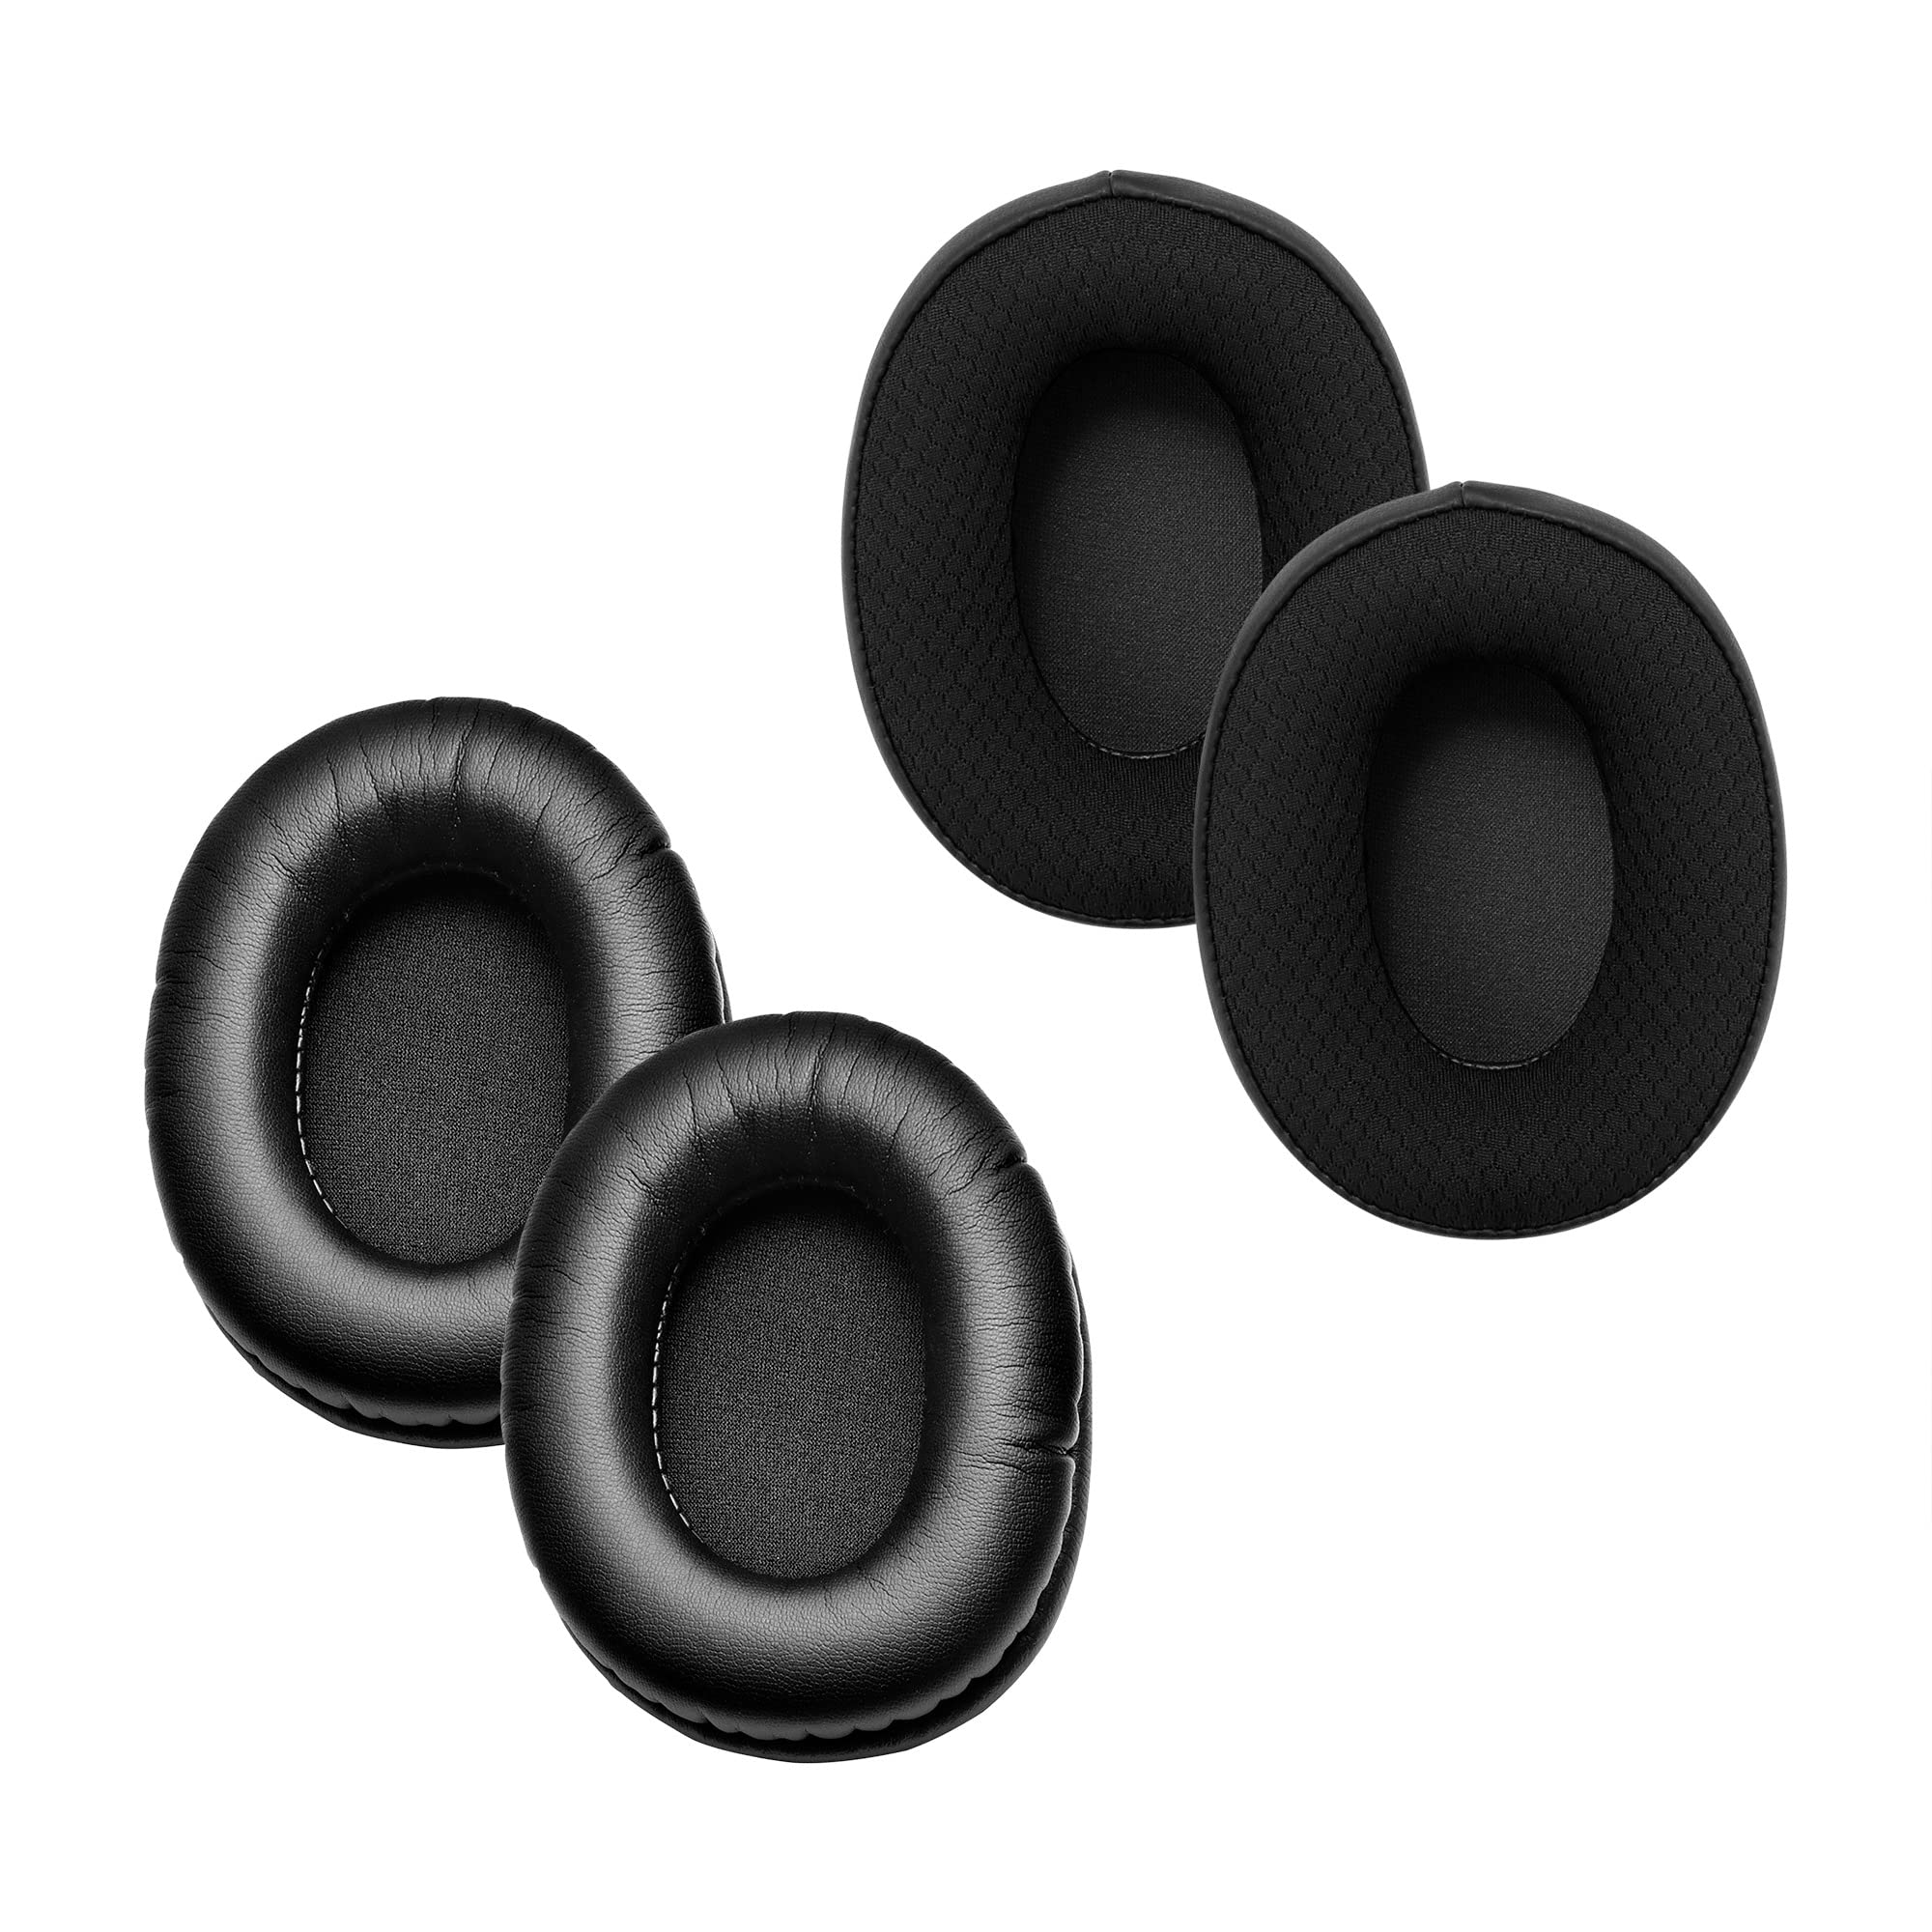 Audio-Technica ATH-M50xSTS XLR StreamSet Streaming Headset, Black